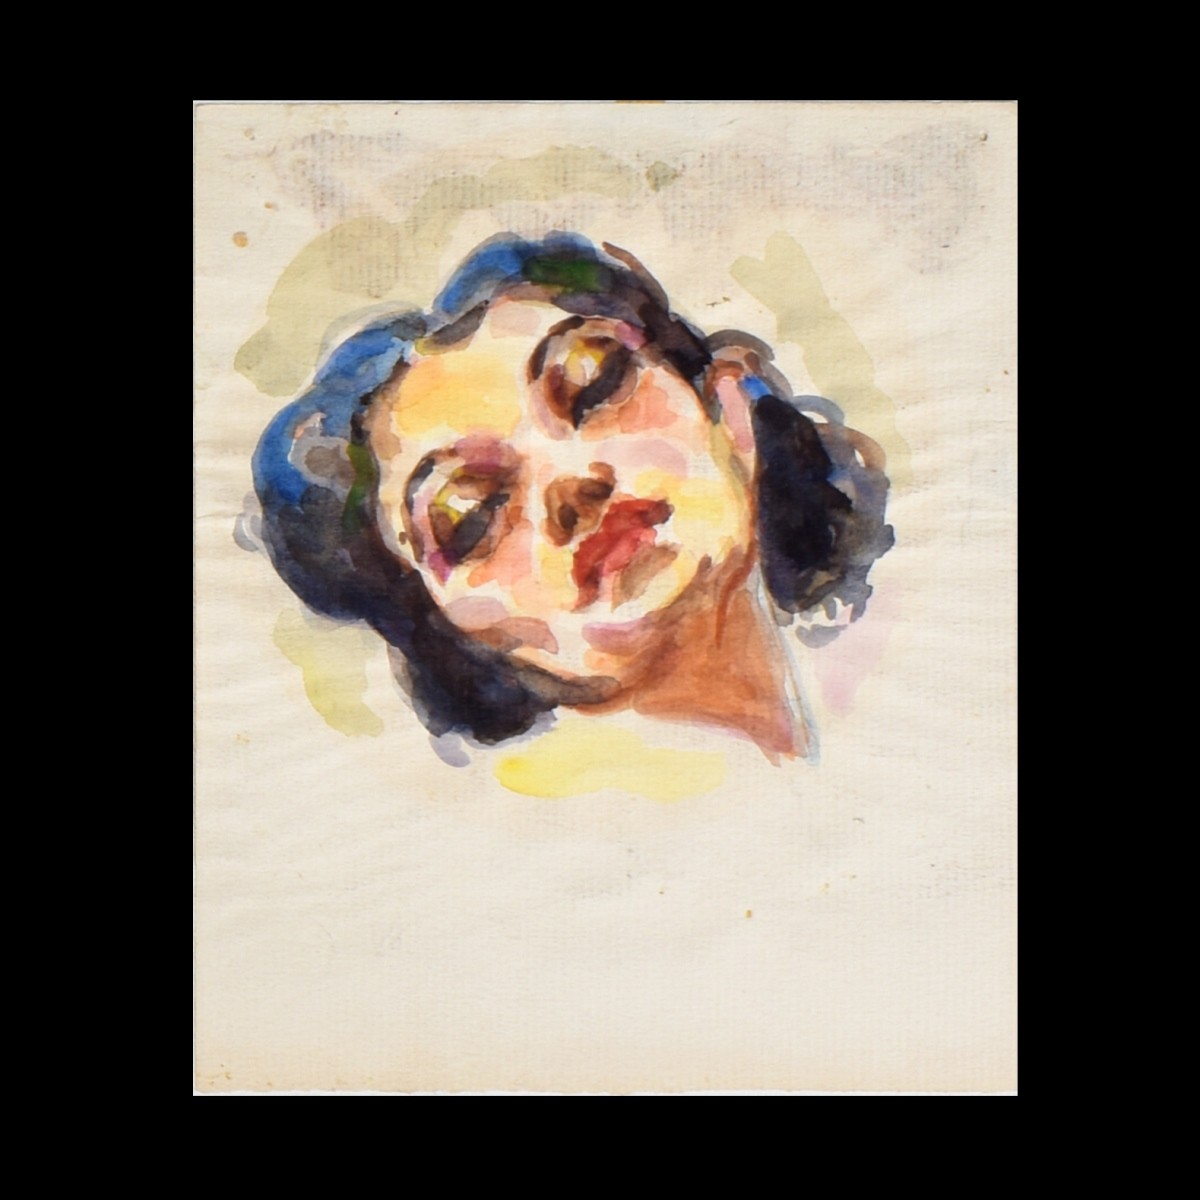 Dox Thrash, American (1893-1965) Watercolor